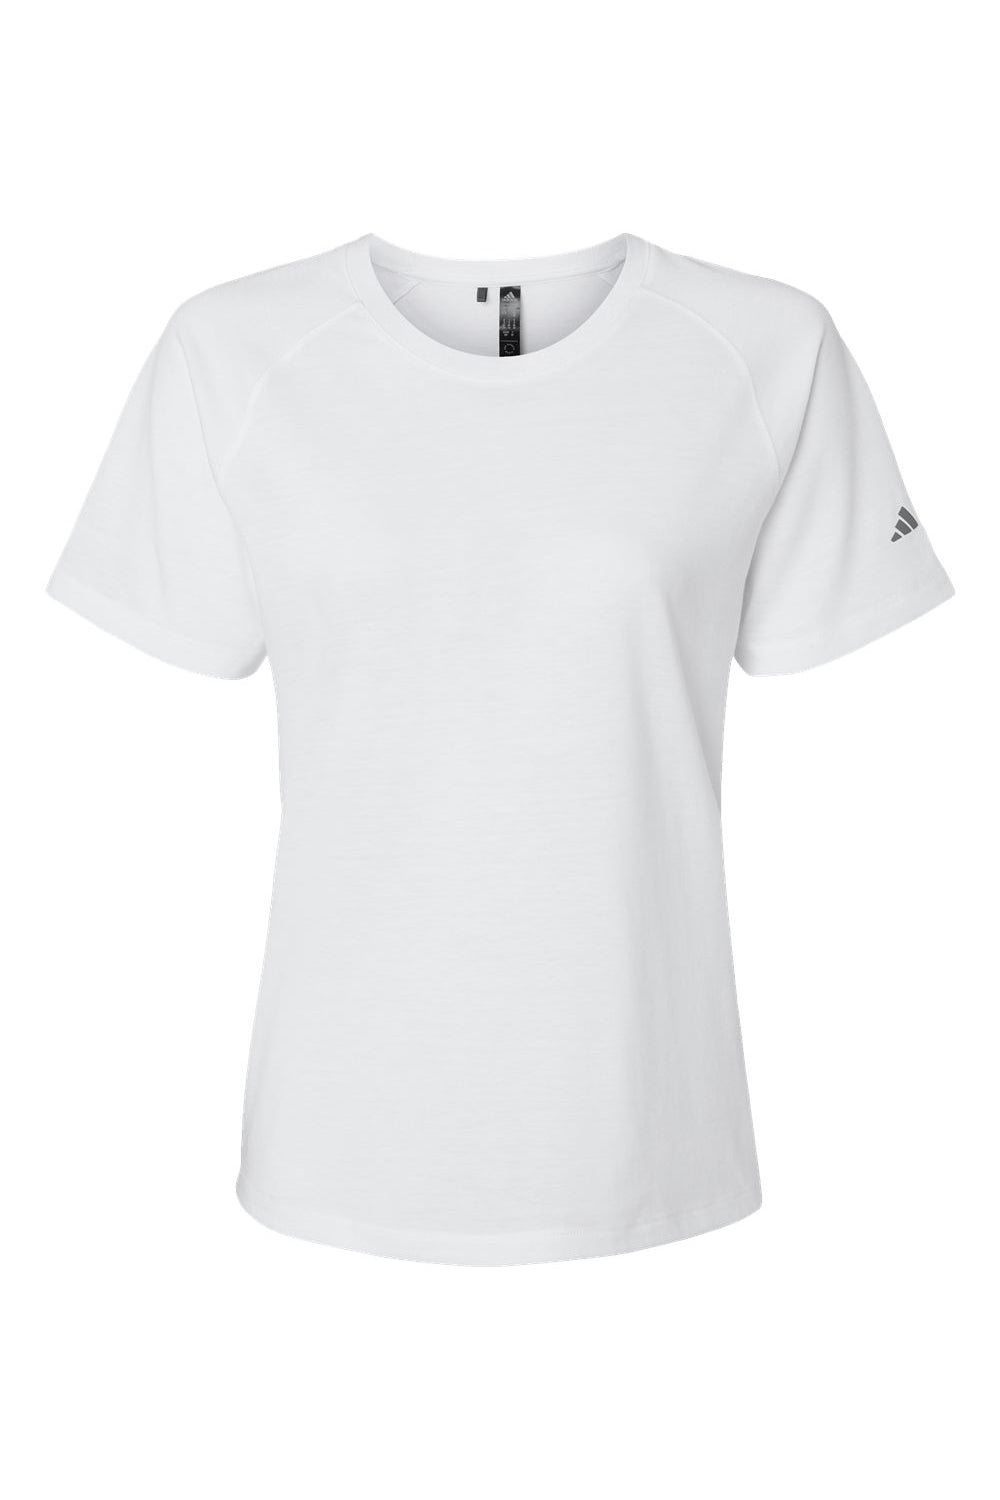 Adidas A557 Womens Short Sleeve Crewneck T-Shirt White Flat Front